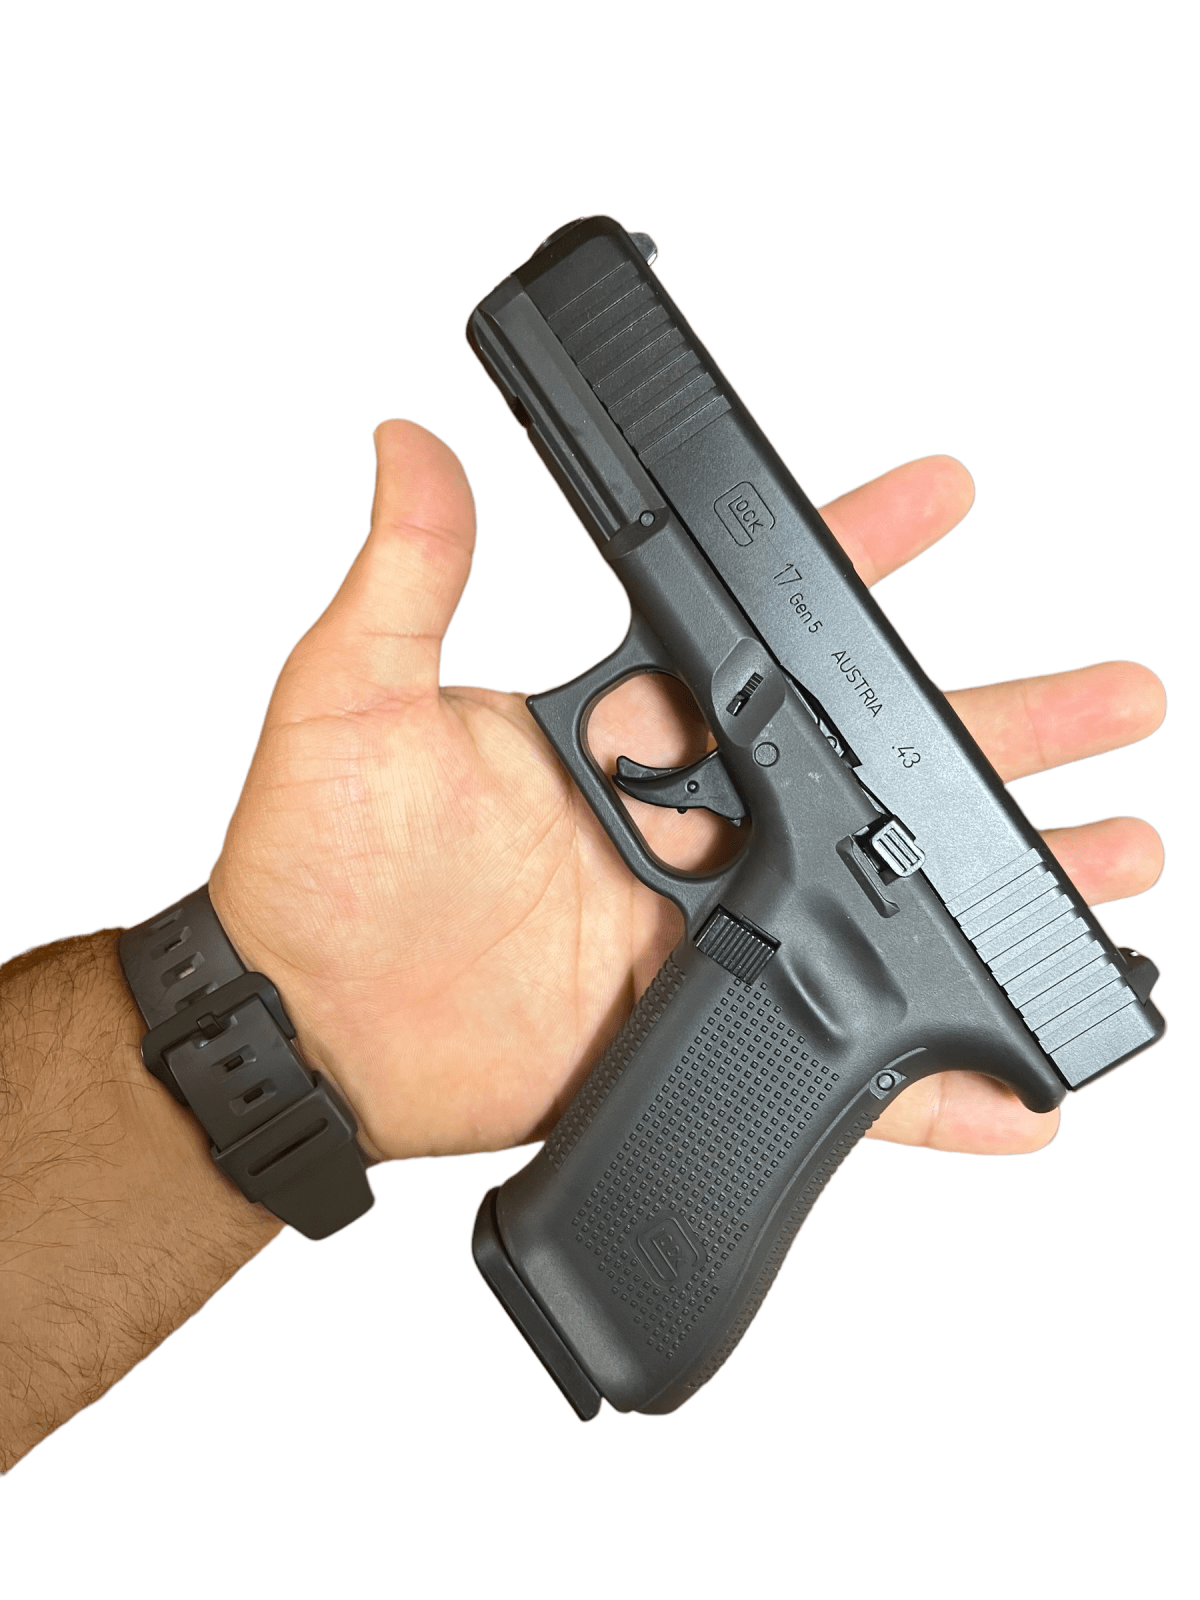 Pistola Glock 17 Traumatica Gen5 /Calibre.43 Full metal Co2 PTC6